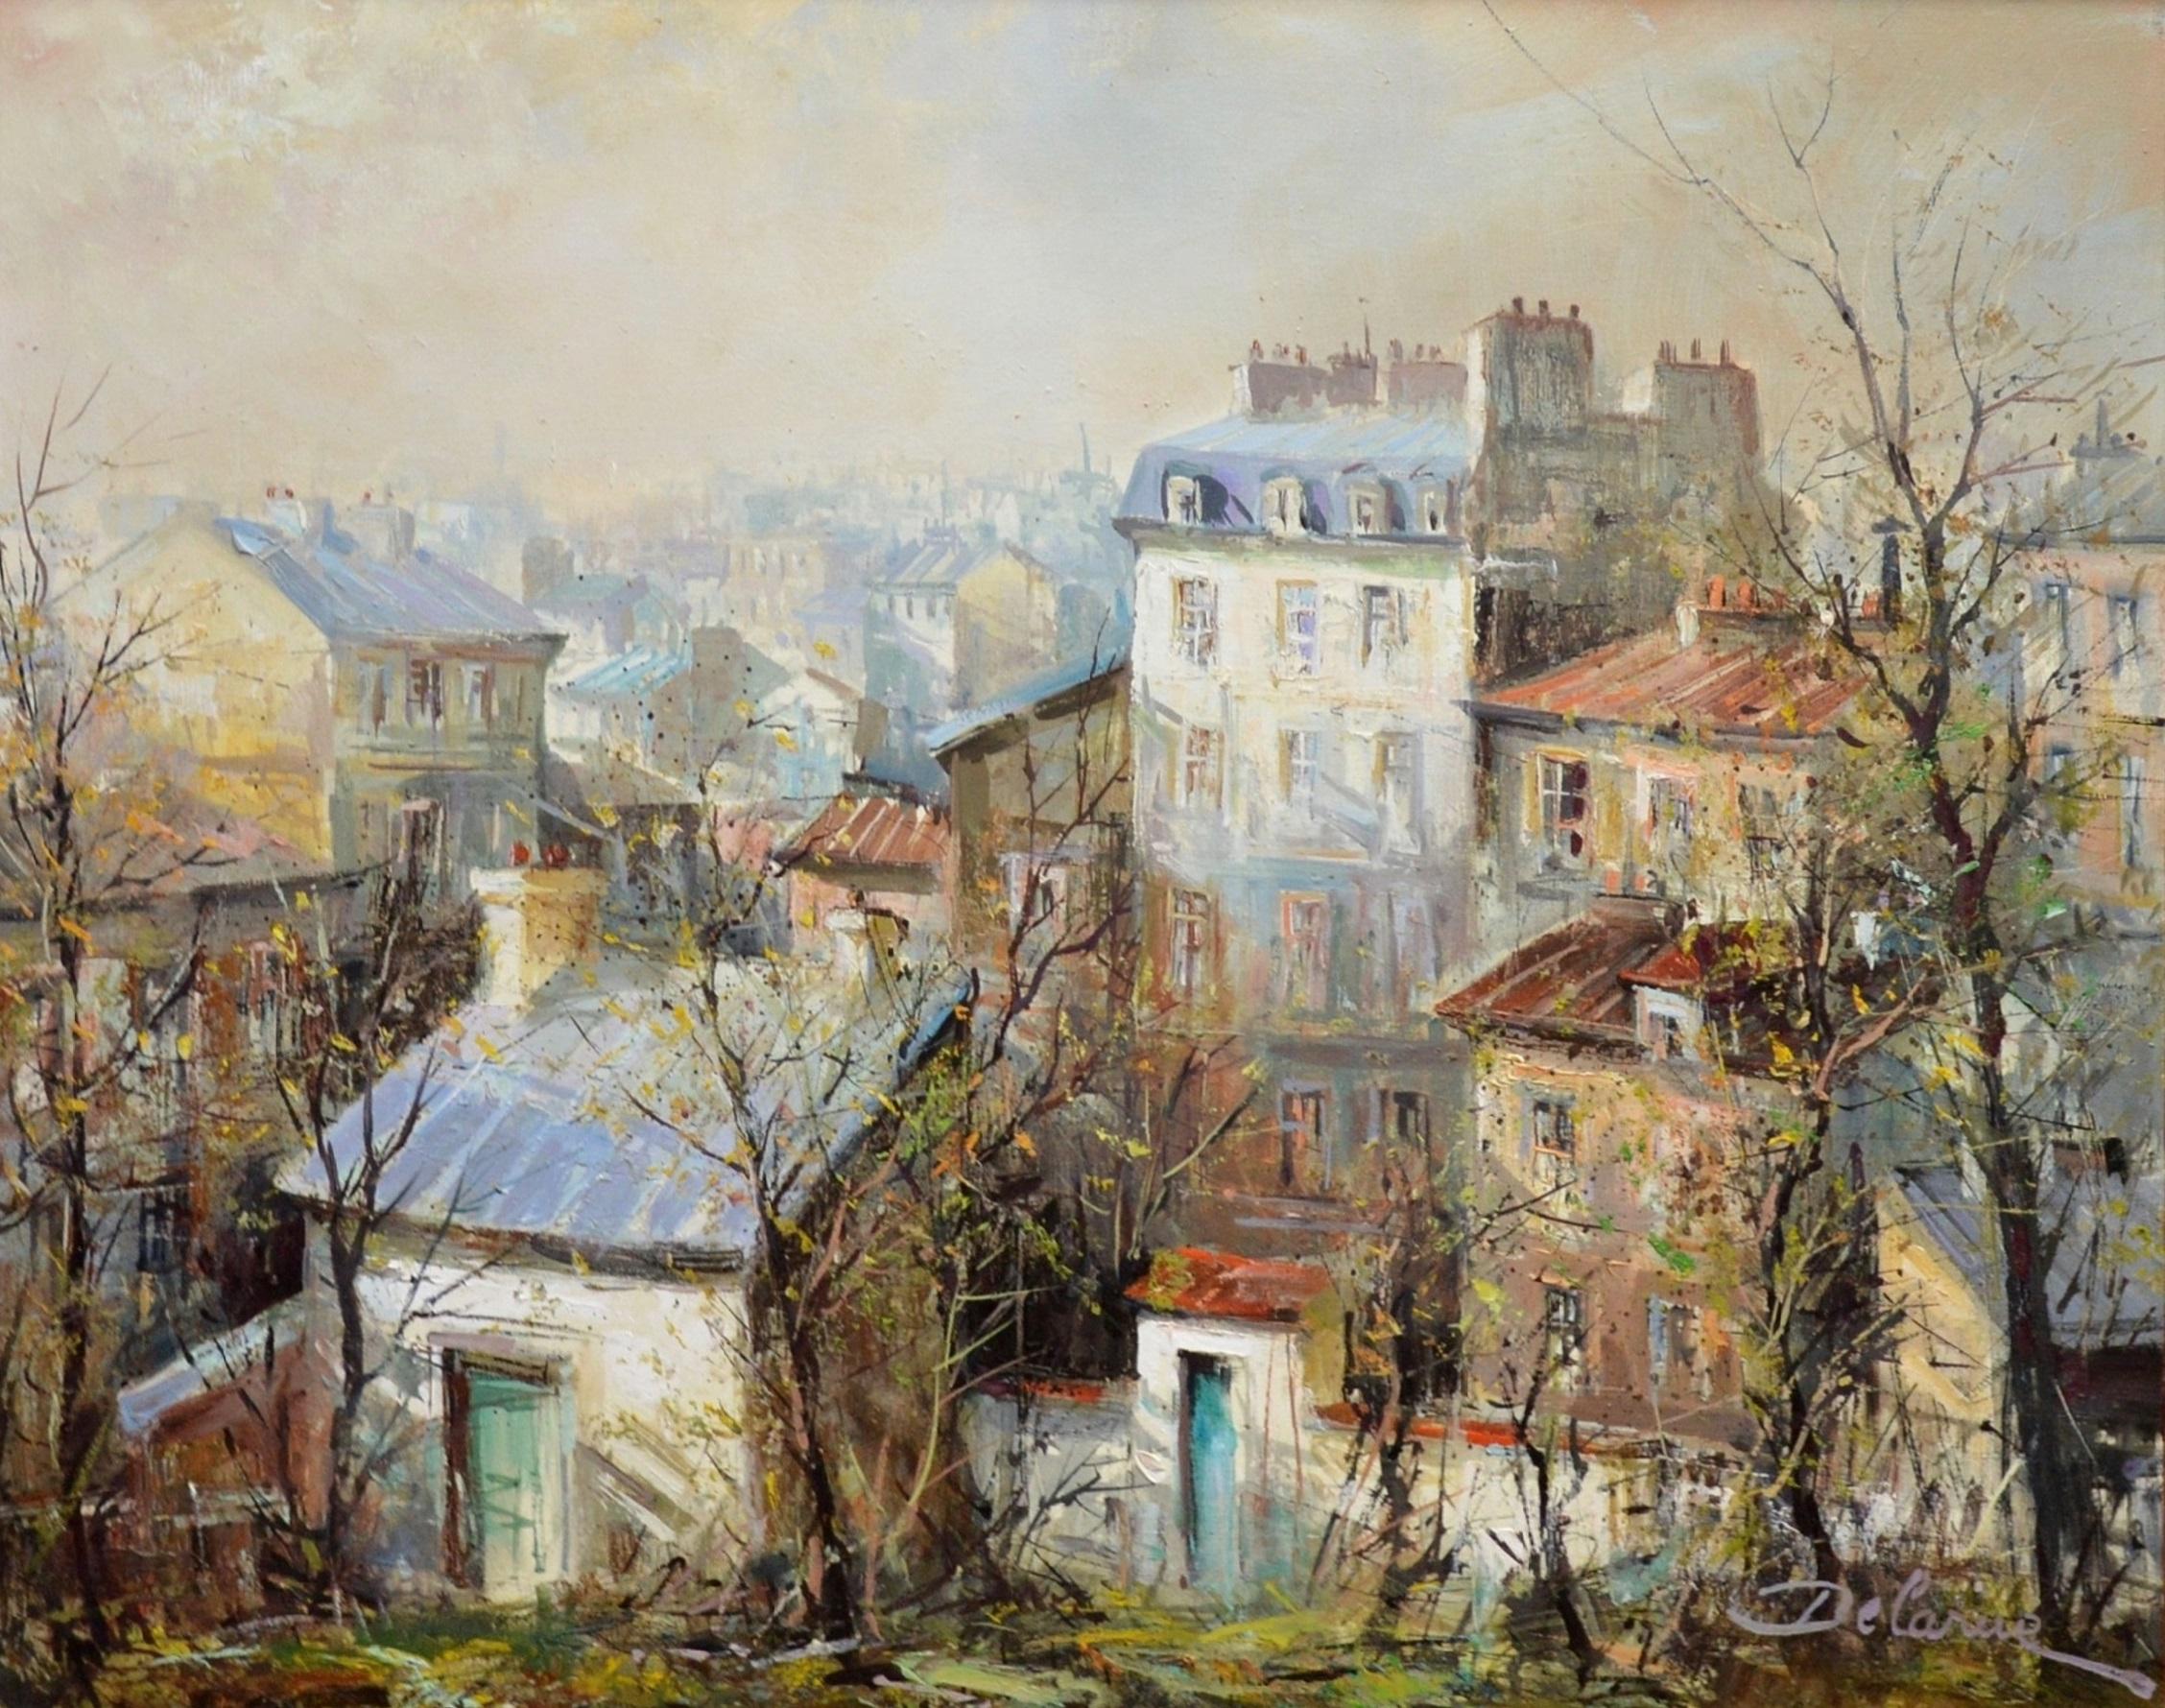 Soleil tot le Matin, Montmartre - French Post Impressionist Oil Painting Paris - Brown Landscape Painting by Lucien Delarue